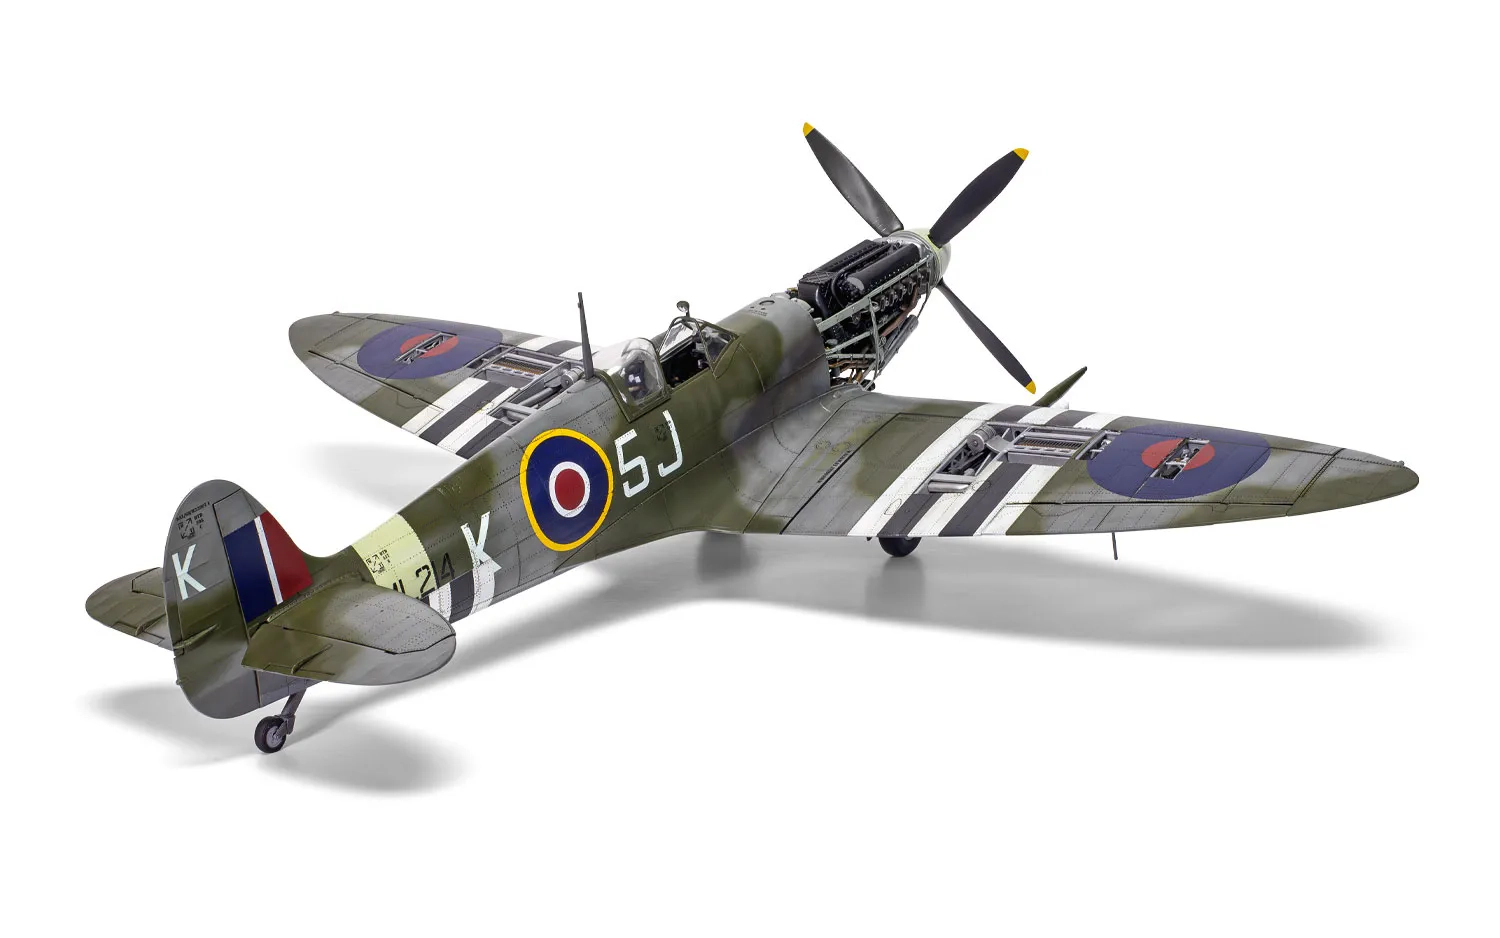 Supermarine Spitfire Mk.Ixc